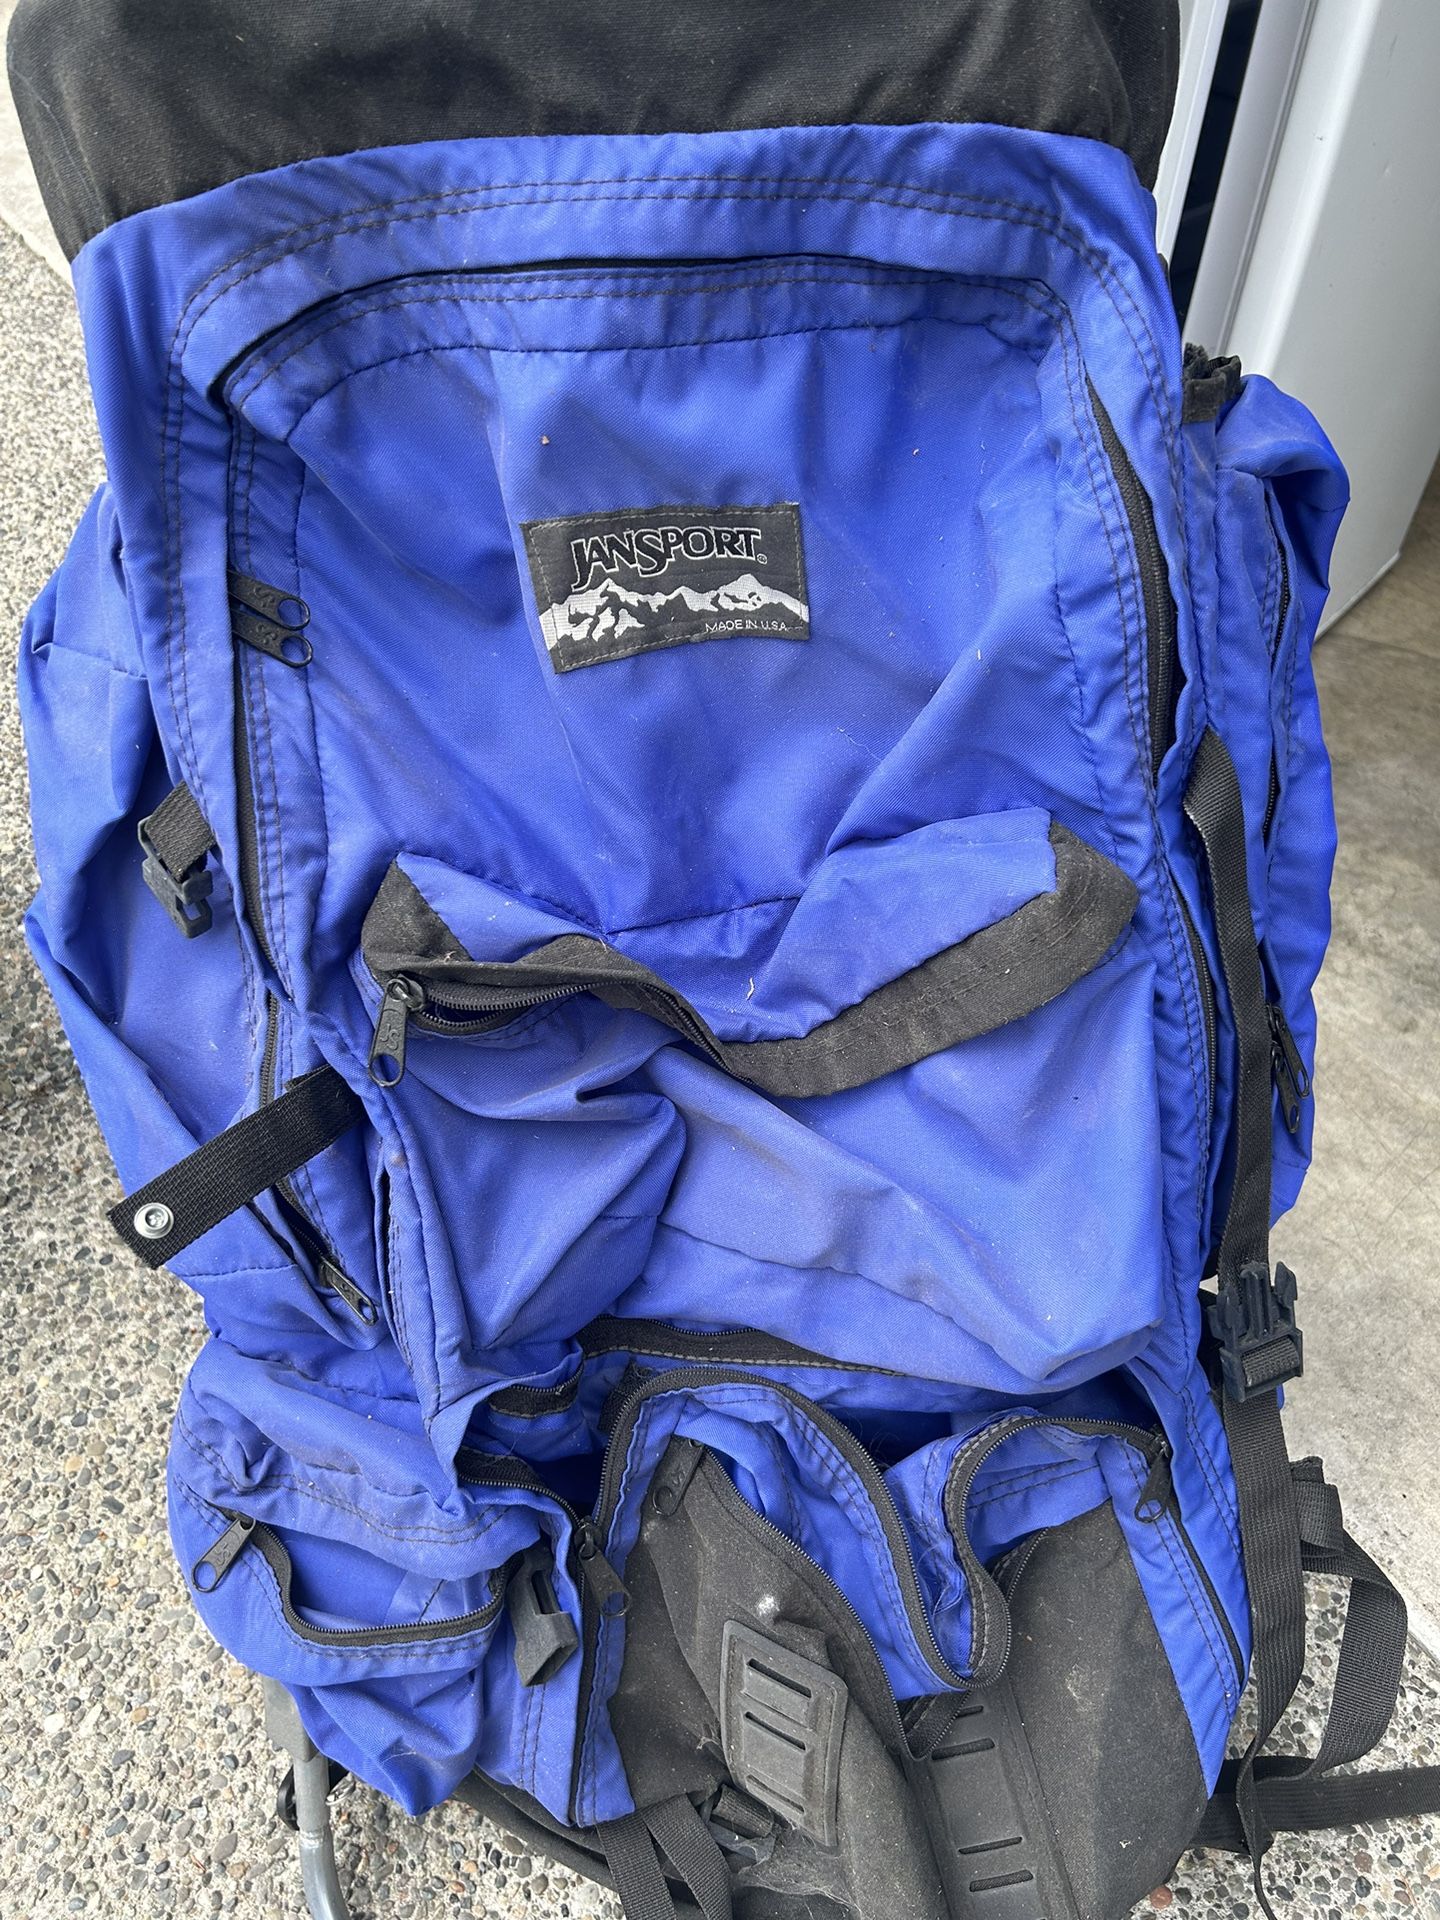 Backpack By Jansport